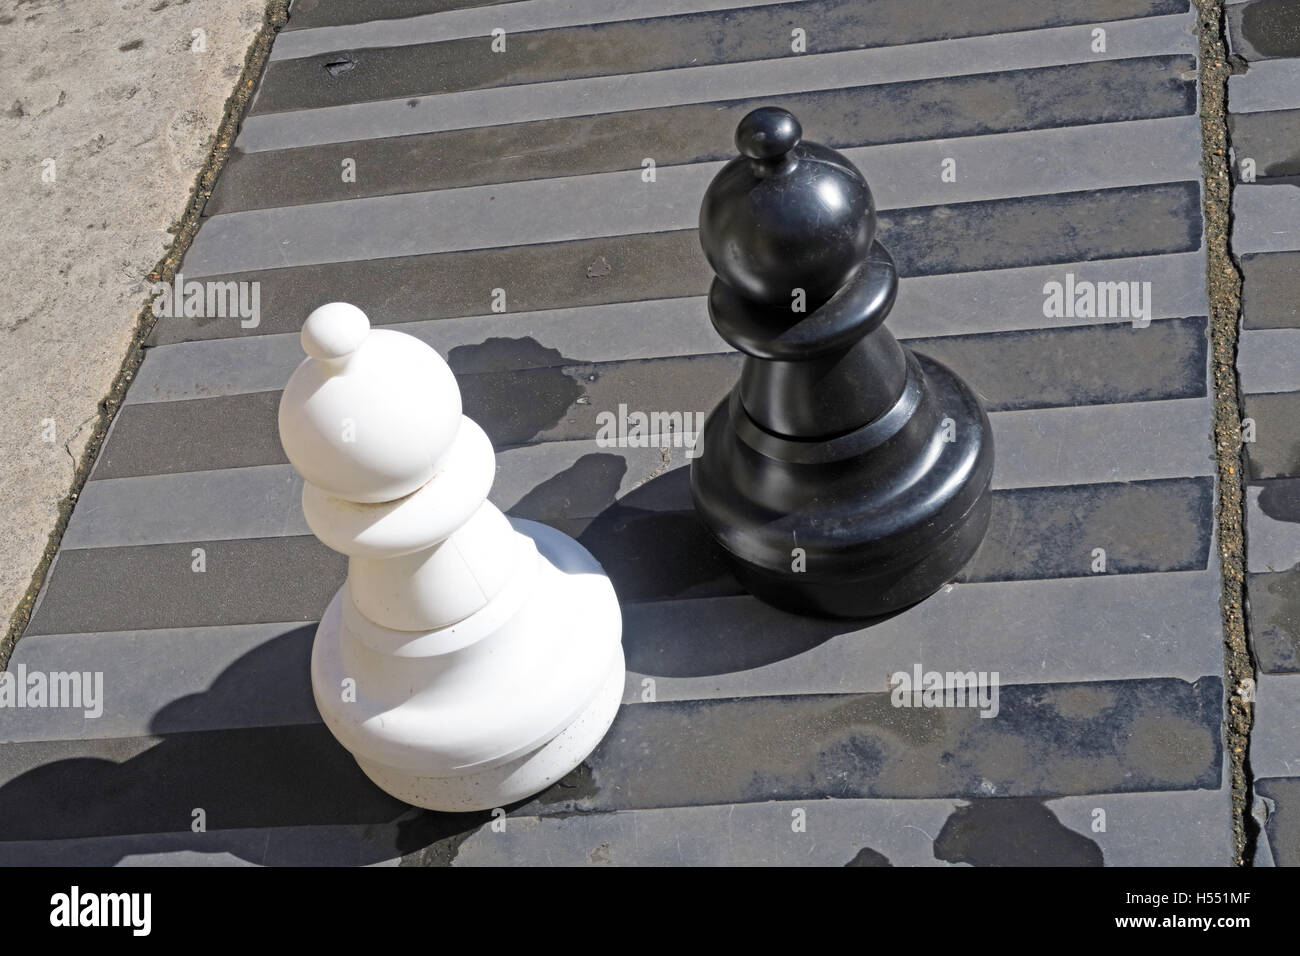 Giant Chess Pieces, London, England, UK Stock Photo